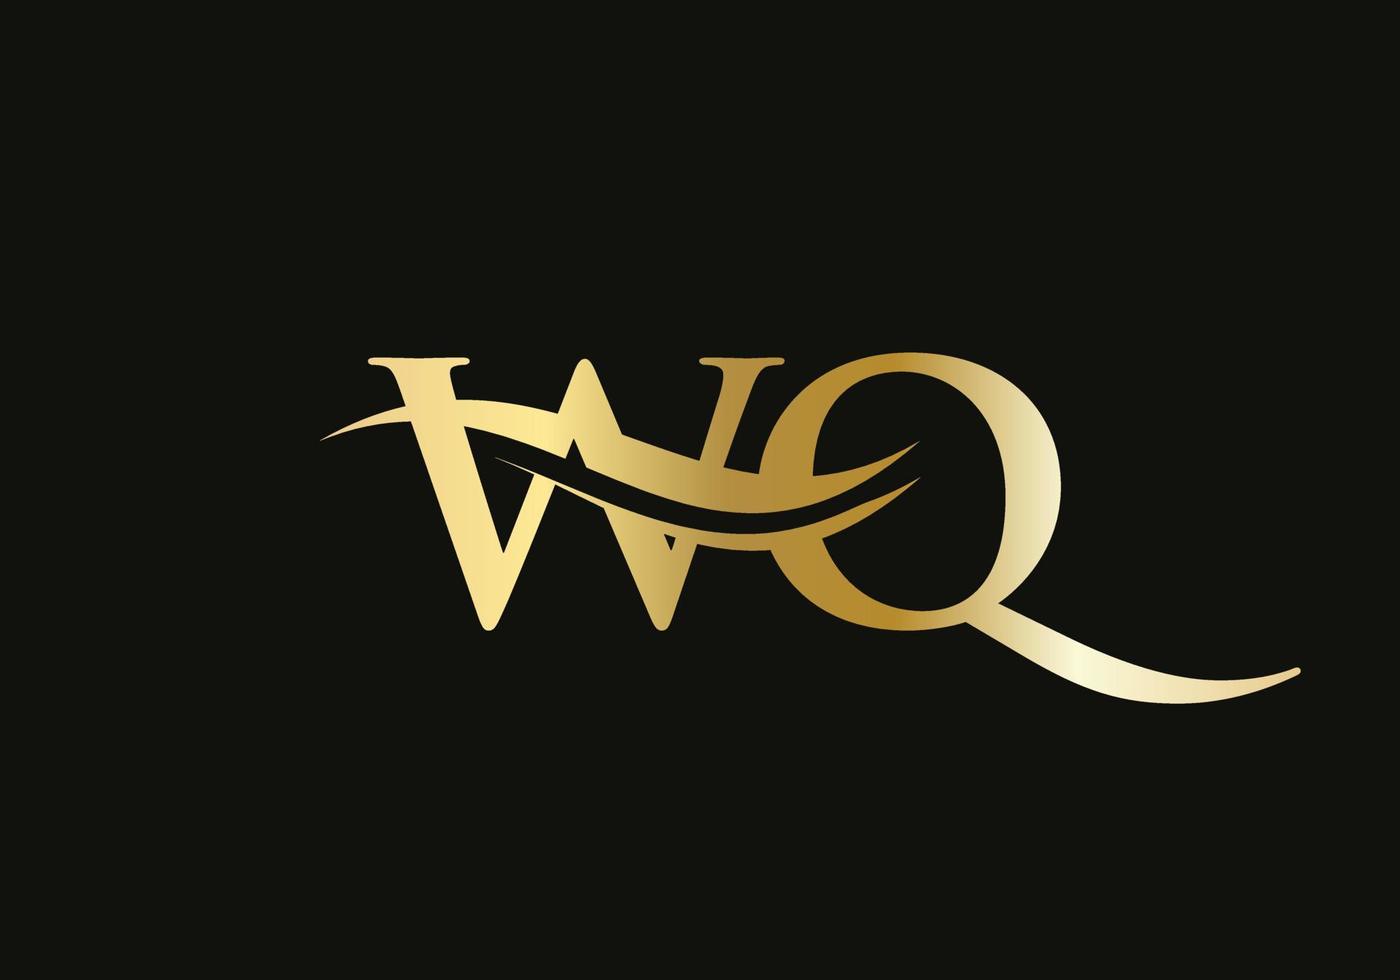 vetor de logotipo wq onda de água. design de logotipo wq de letra swoosh para negócios e identidade da empresa